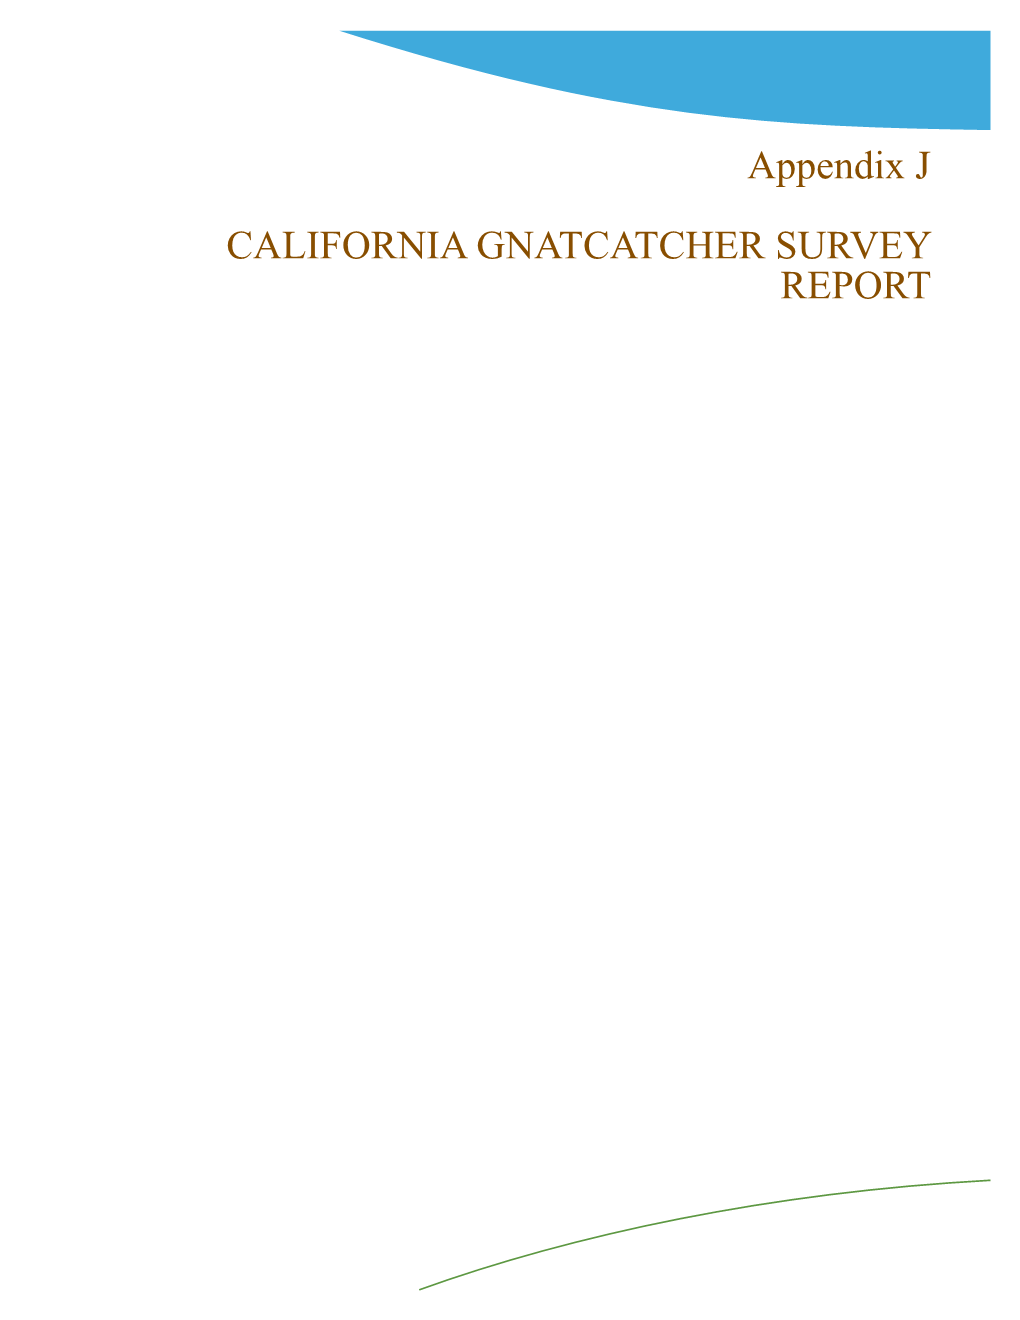 Appendix J CALIFORNIA GNATCATCHER SURVEY REPORT